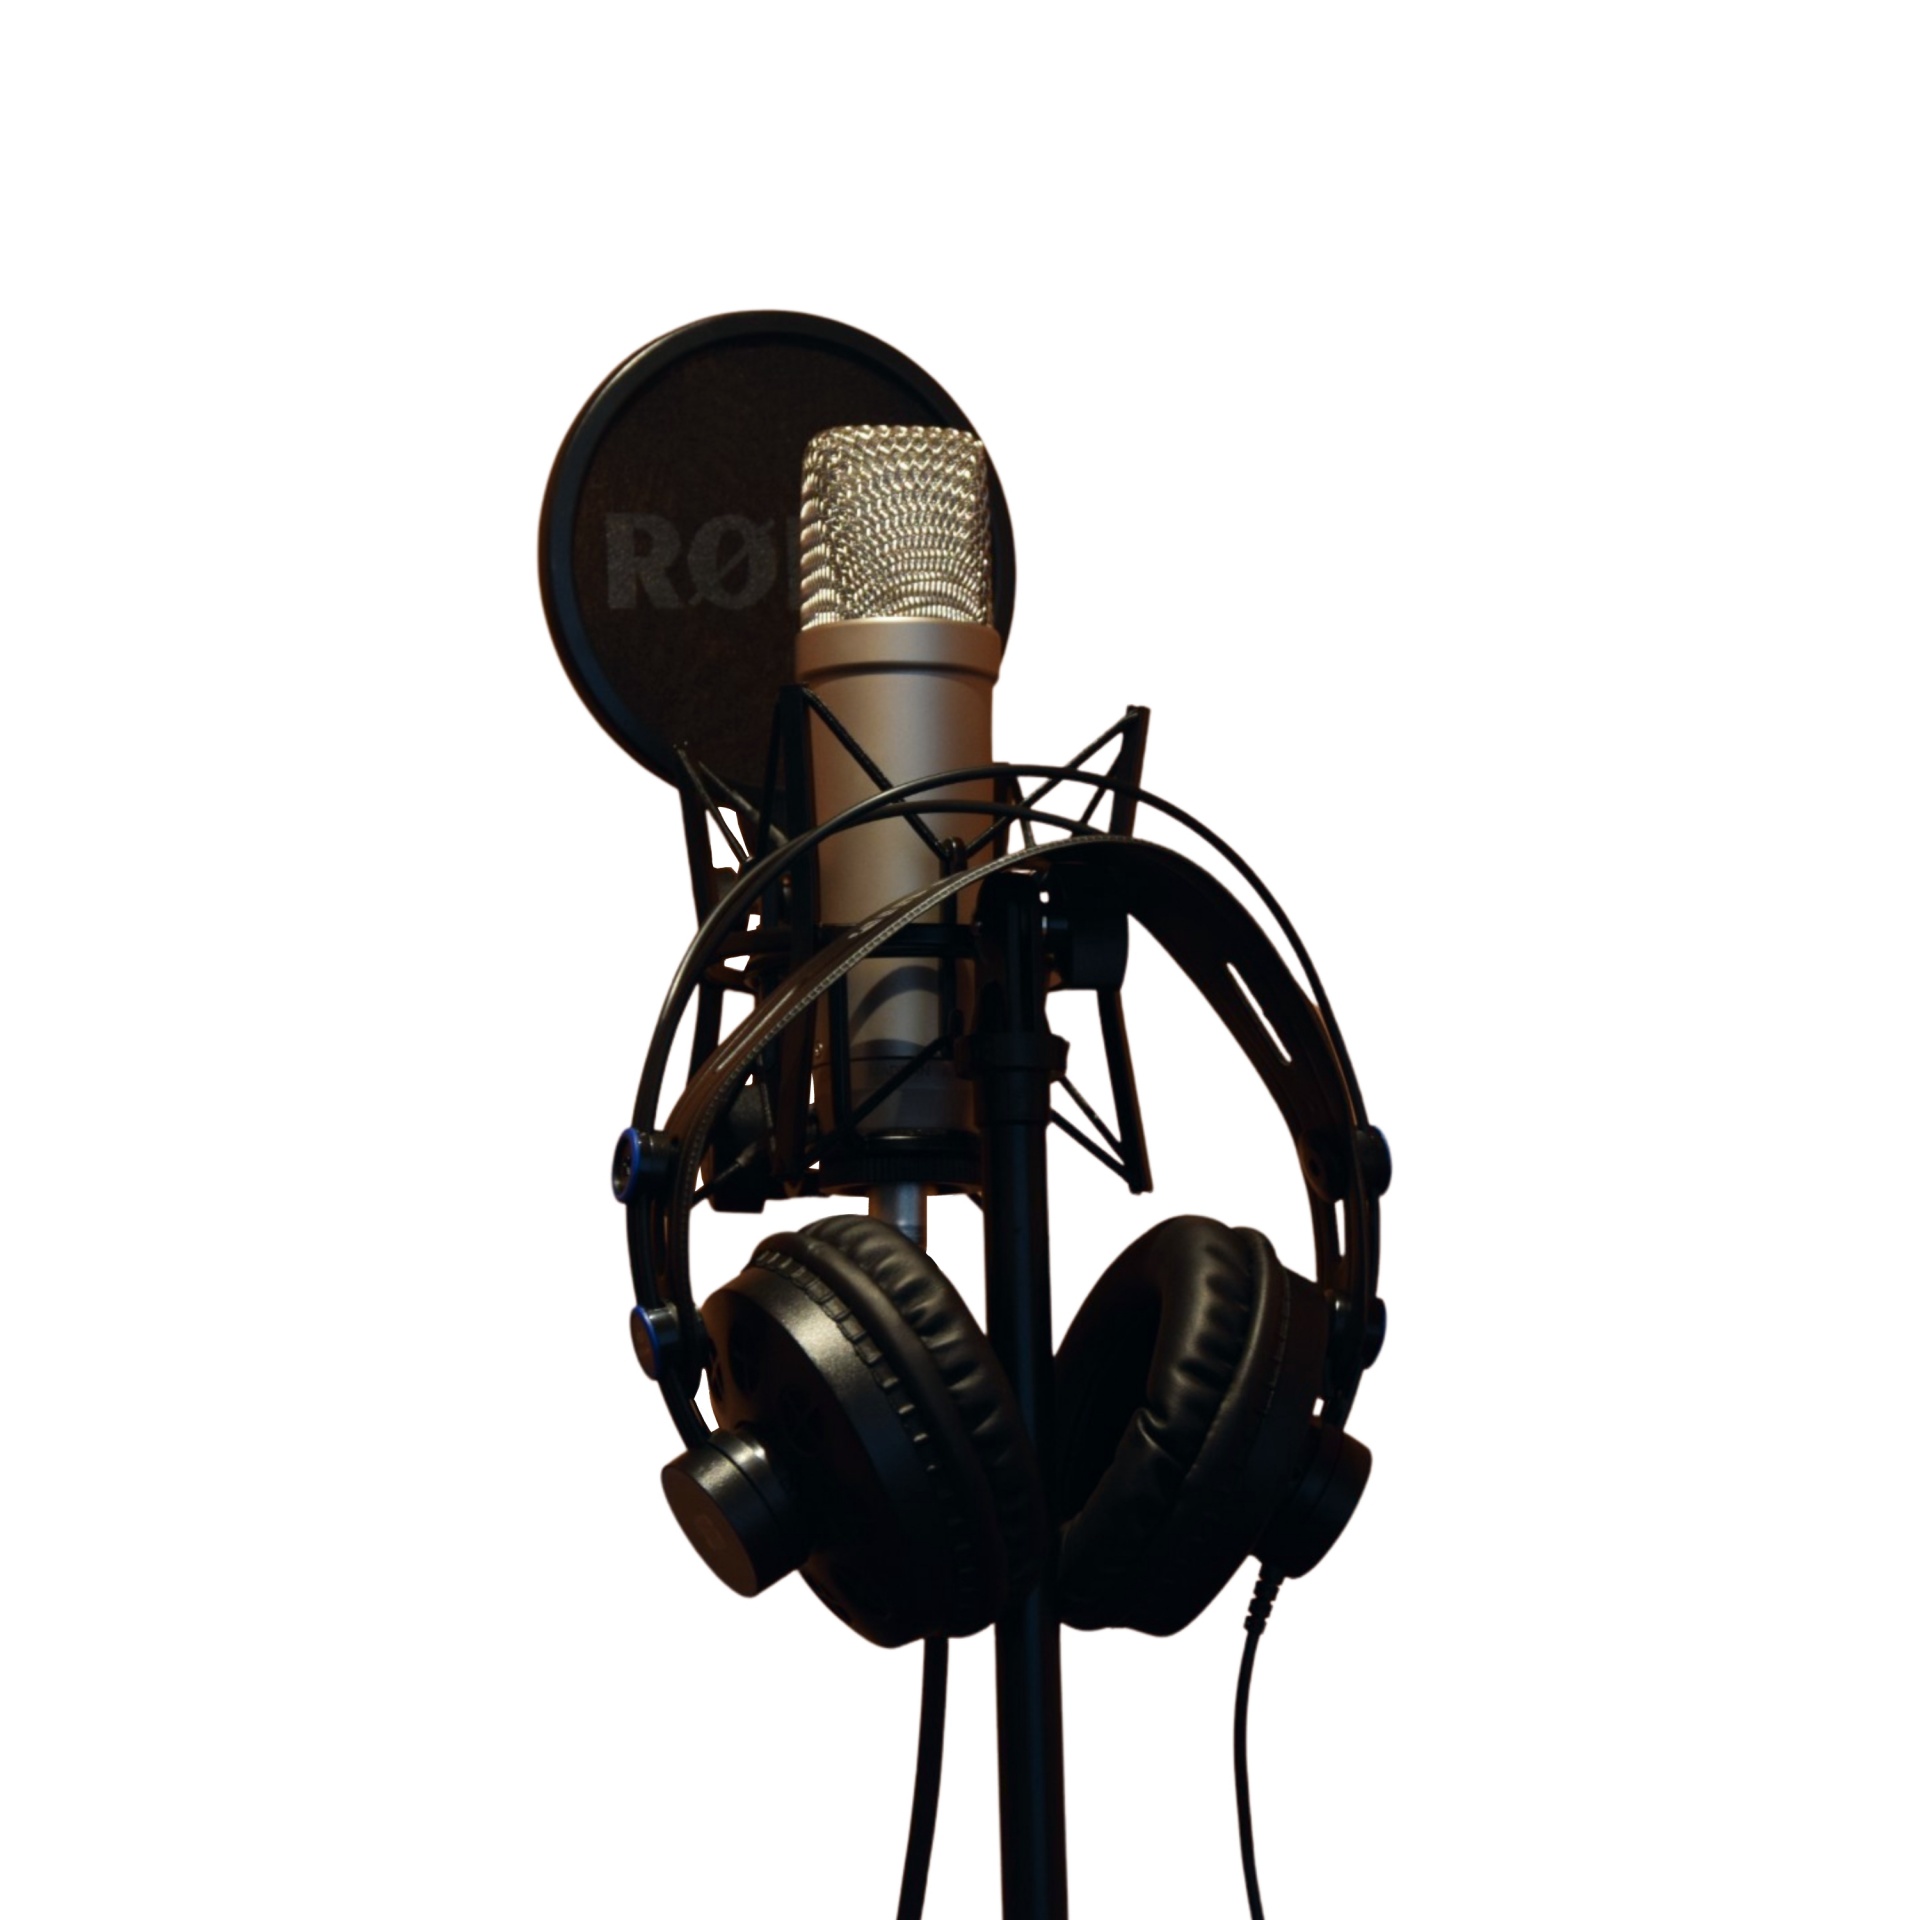 microphone, headphones, music, mic, audio, studio, voice, recording, vocal, audio equipment, technology, sound, cutout microphone, headphones, music, mic, audio, studio, voice, recording, vocal, audio equipment, technology, sound, cutout